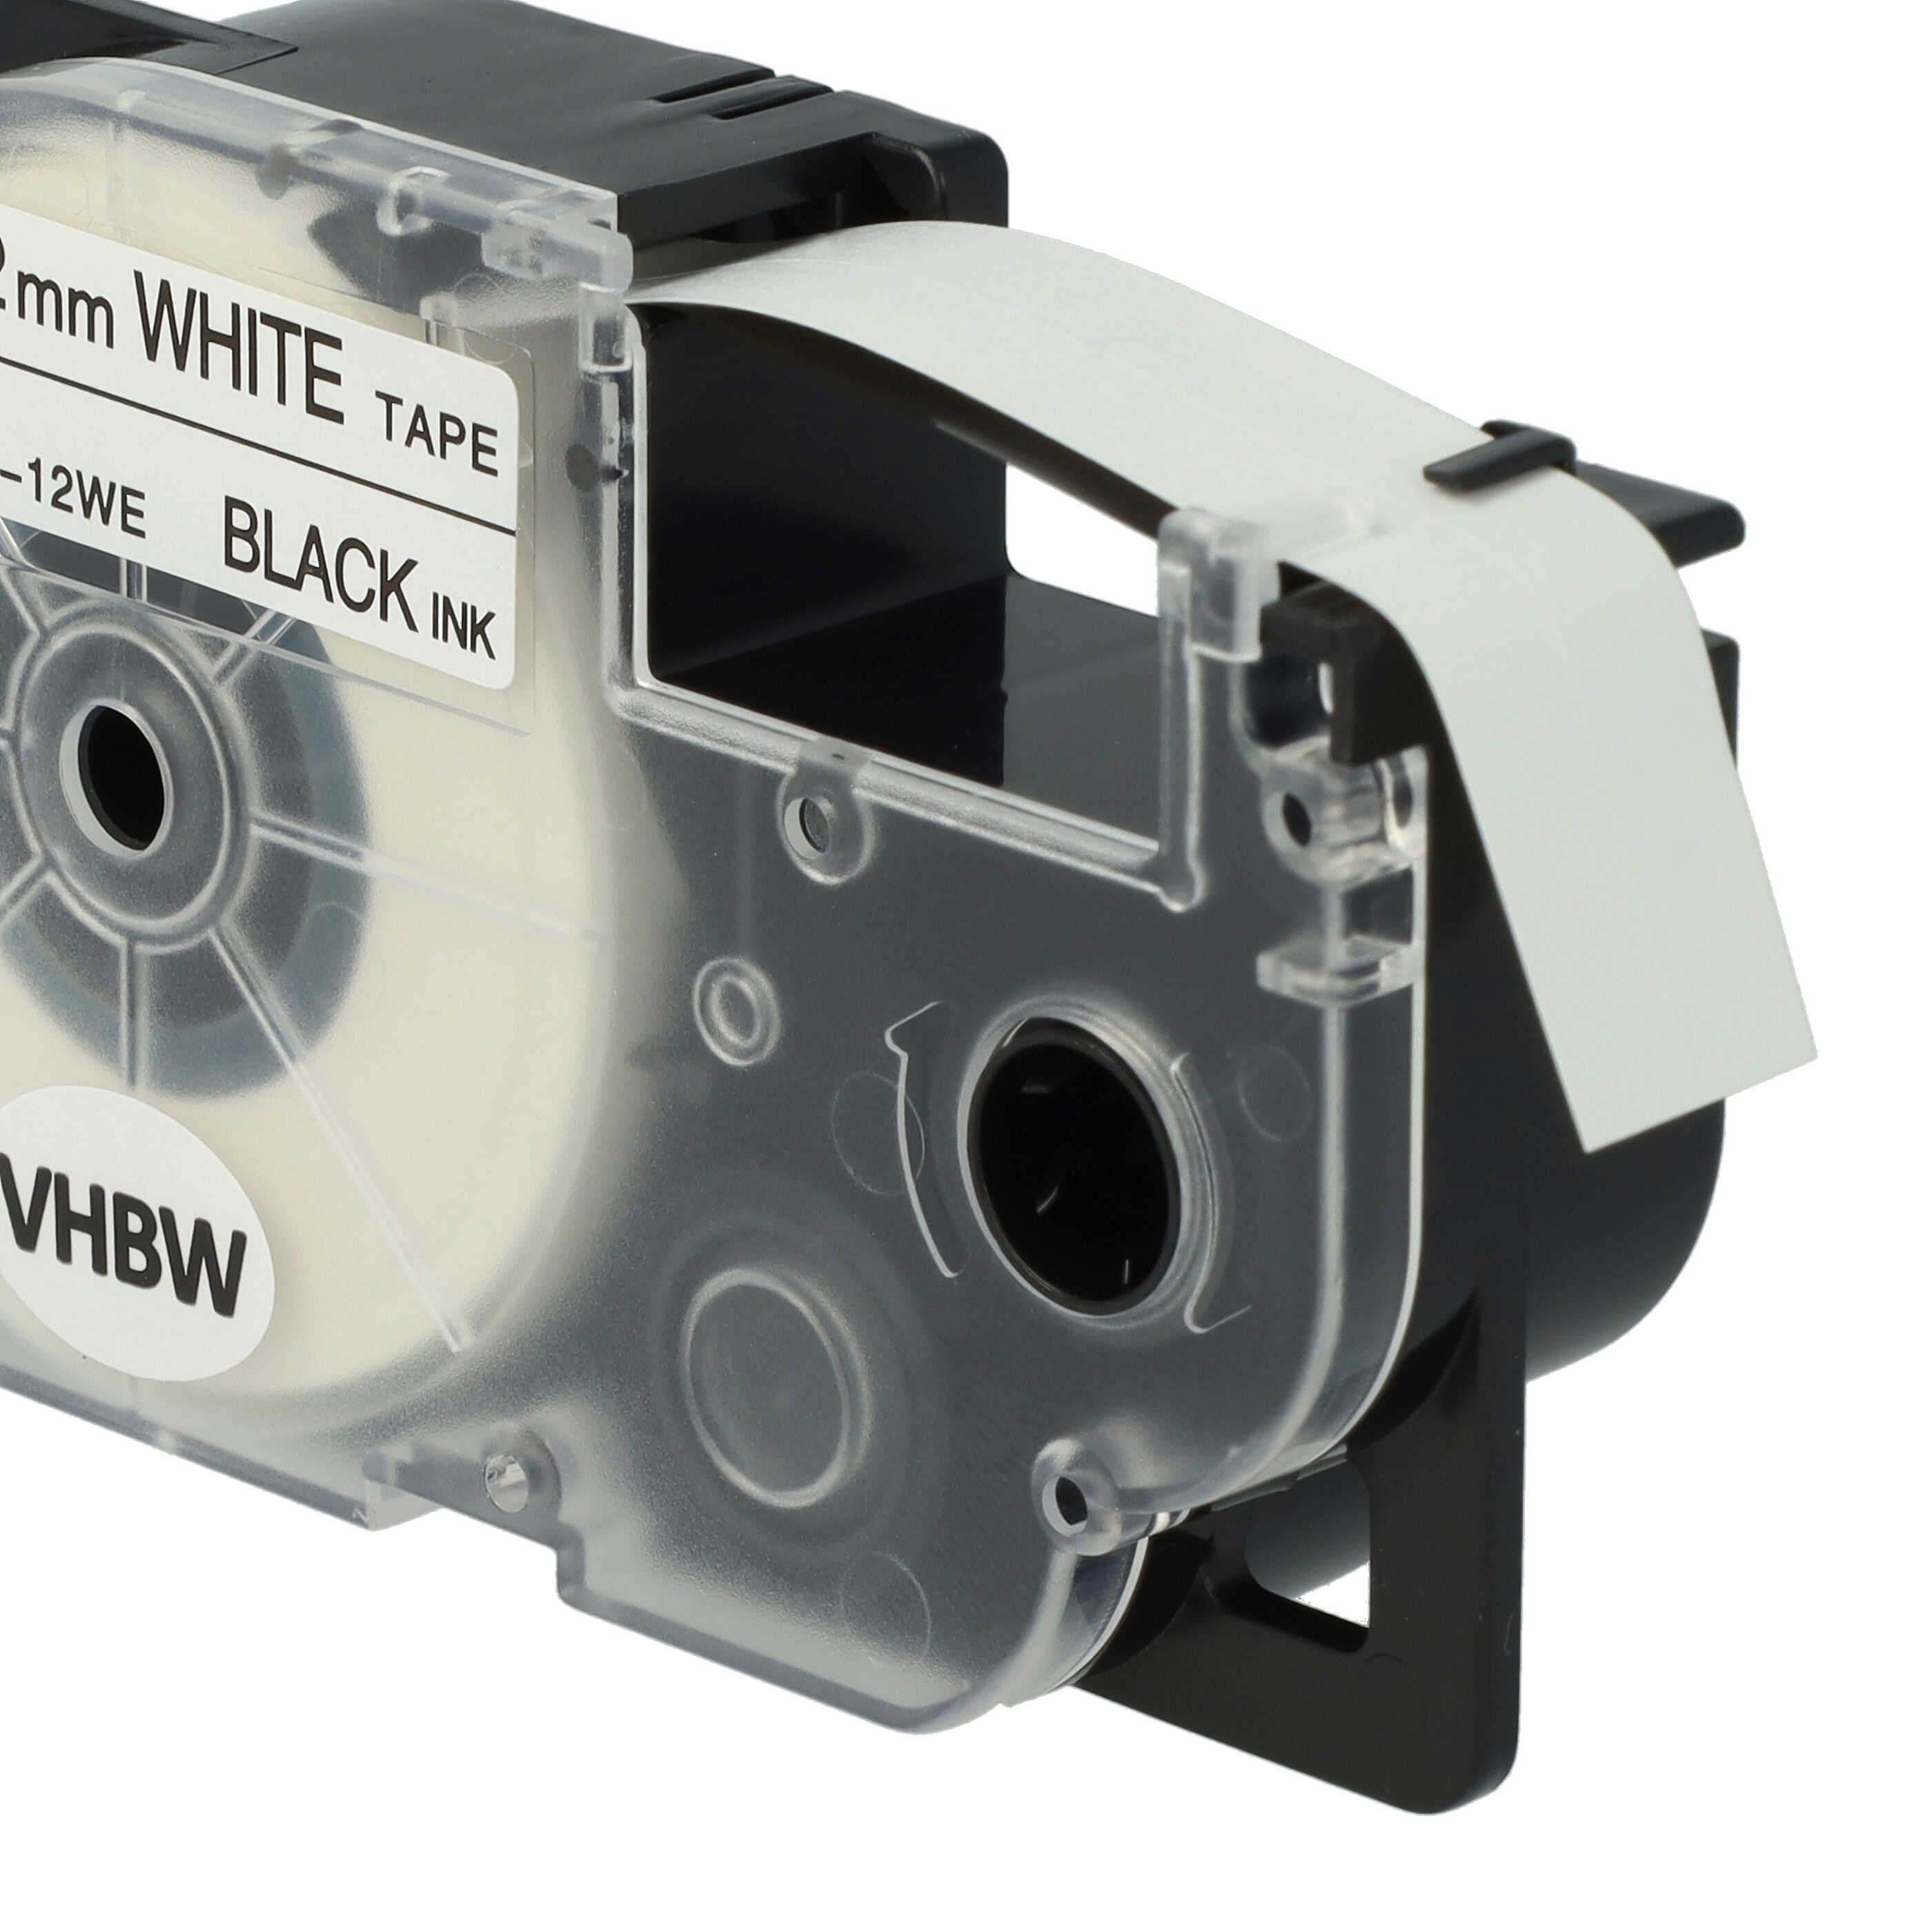 10x Casete cinta escritura reemplaza Casio XR-12WE, XR-12WE1 Negro su Blanco